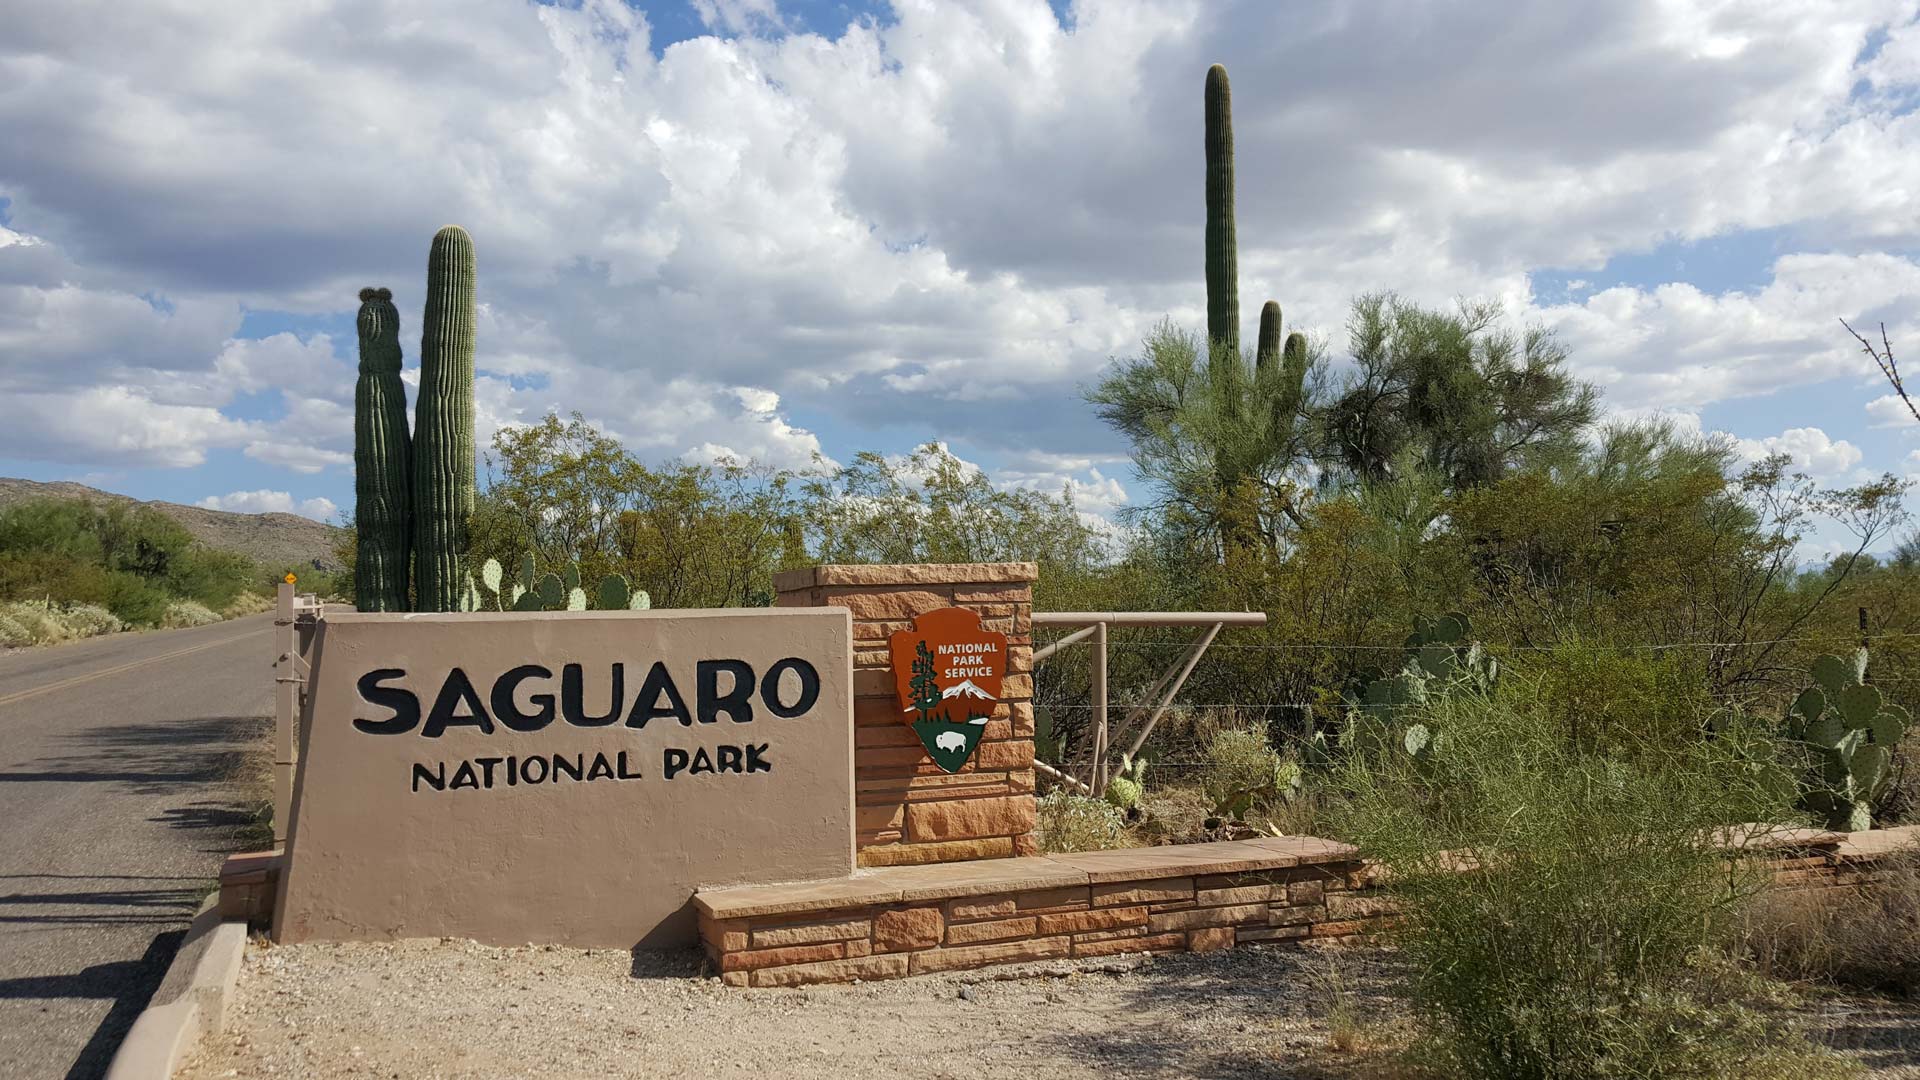 The entrance to Saguaro National Park east.